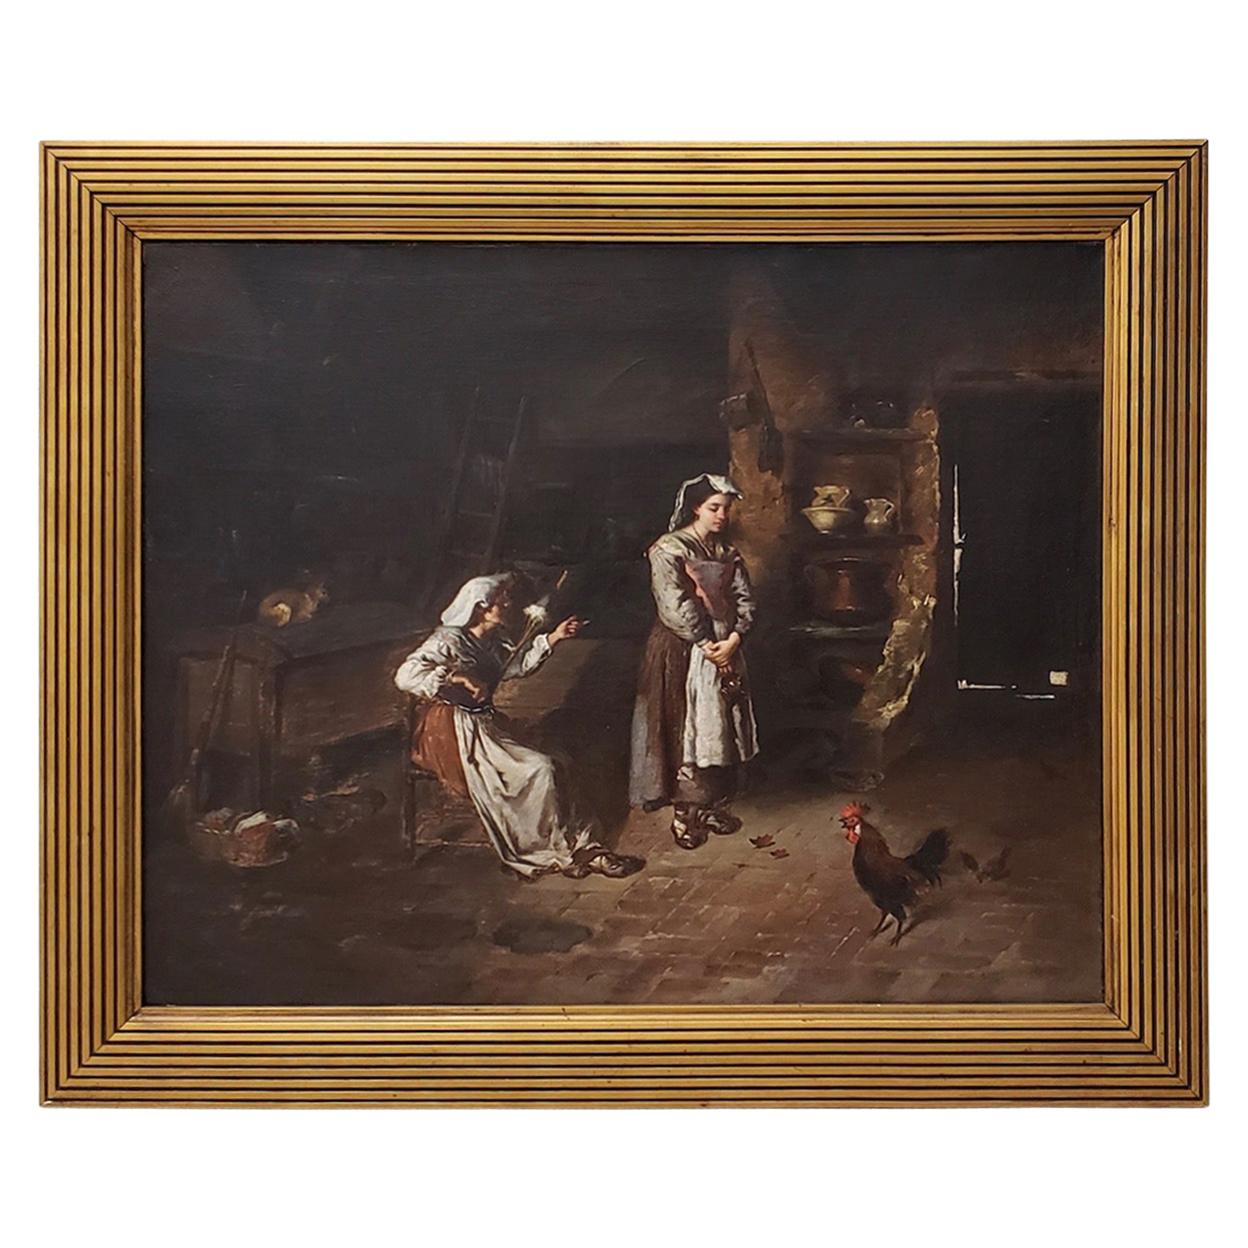 Joseph Mazzuloni 'Italy' "The Broken Jug" Original Oil Painting, circa 1890s